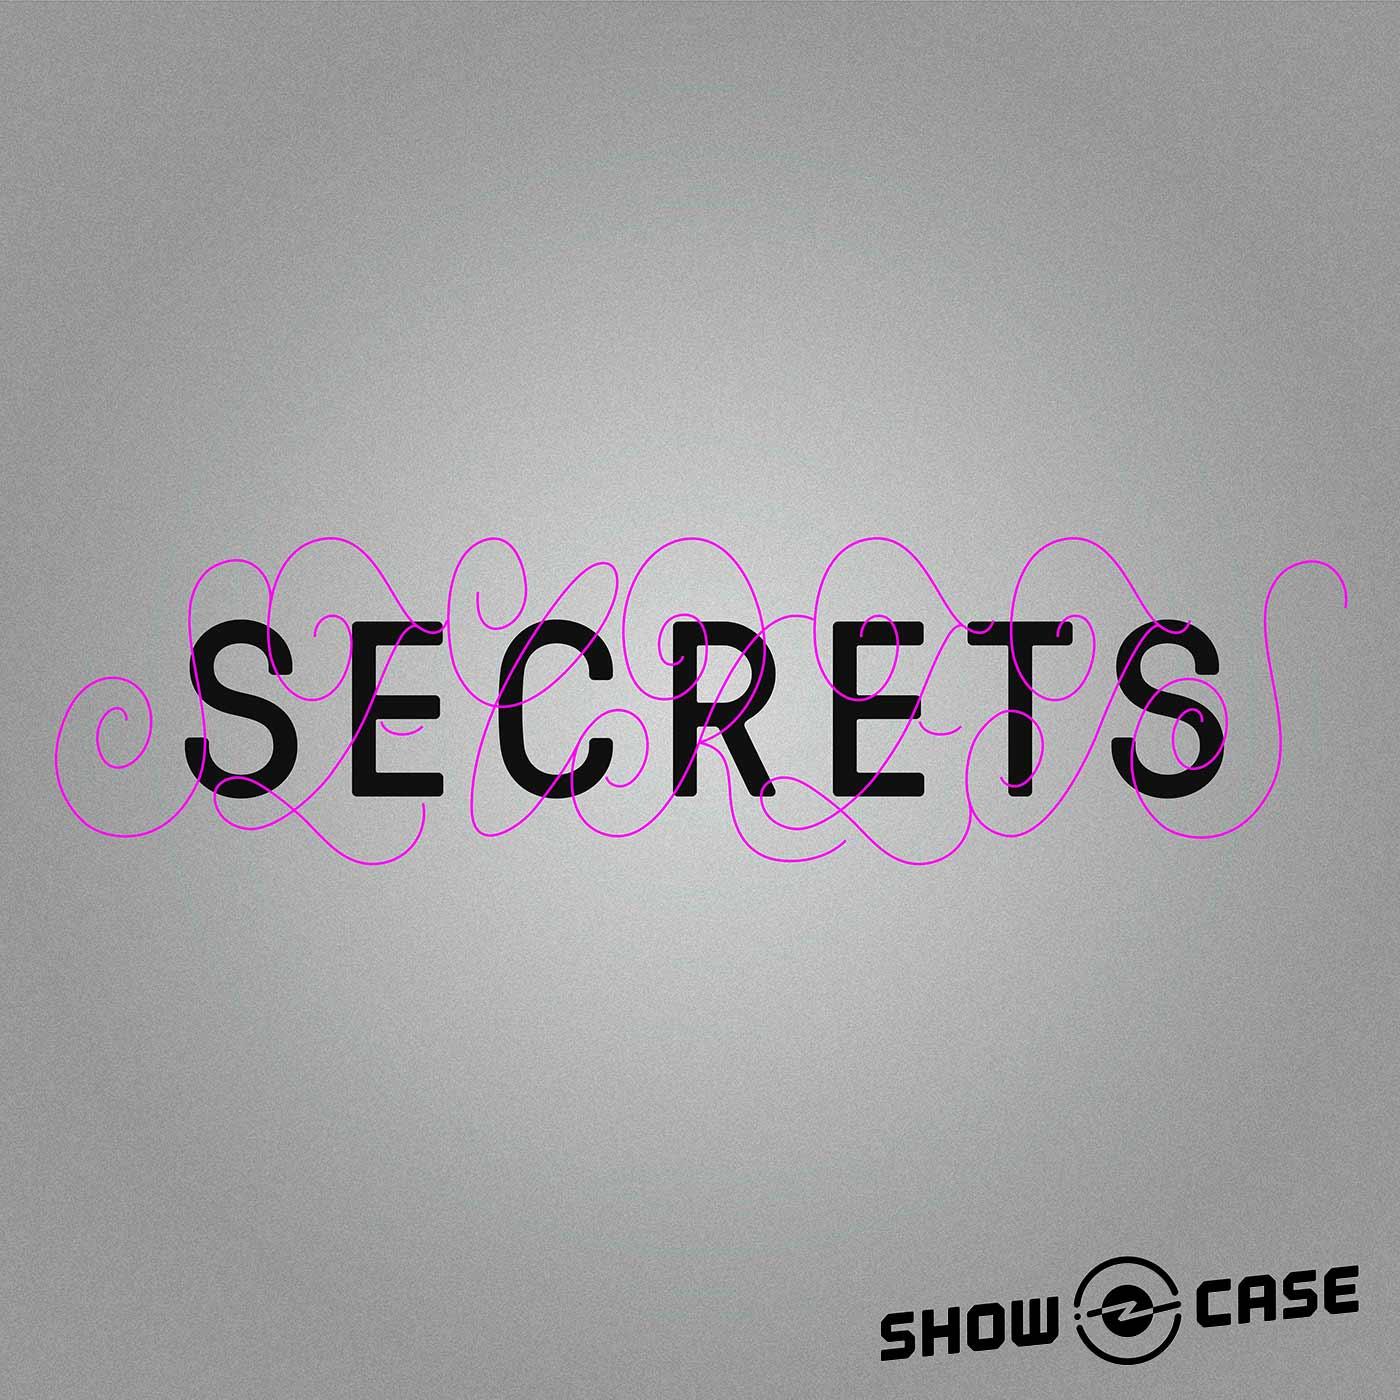 Thumbnail for "Secrets #2 – How to Create a Secret".